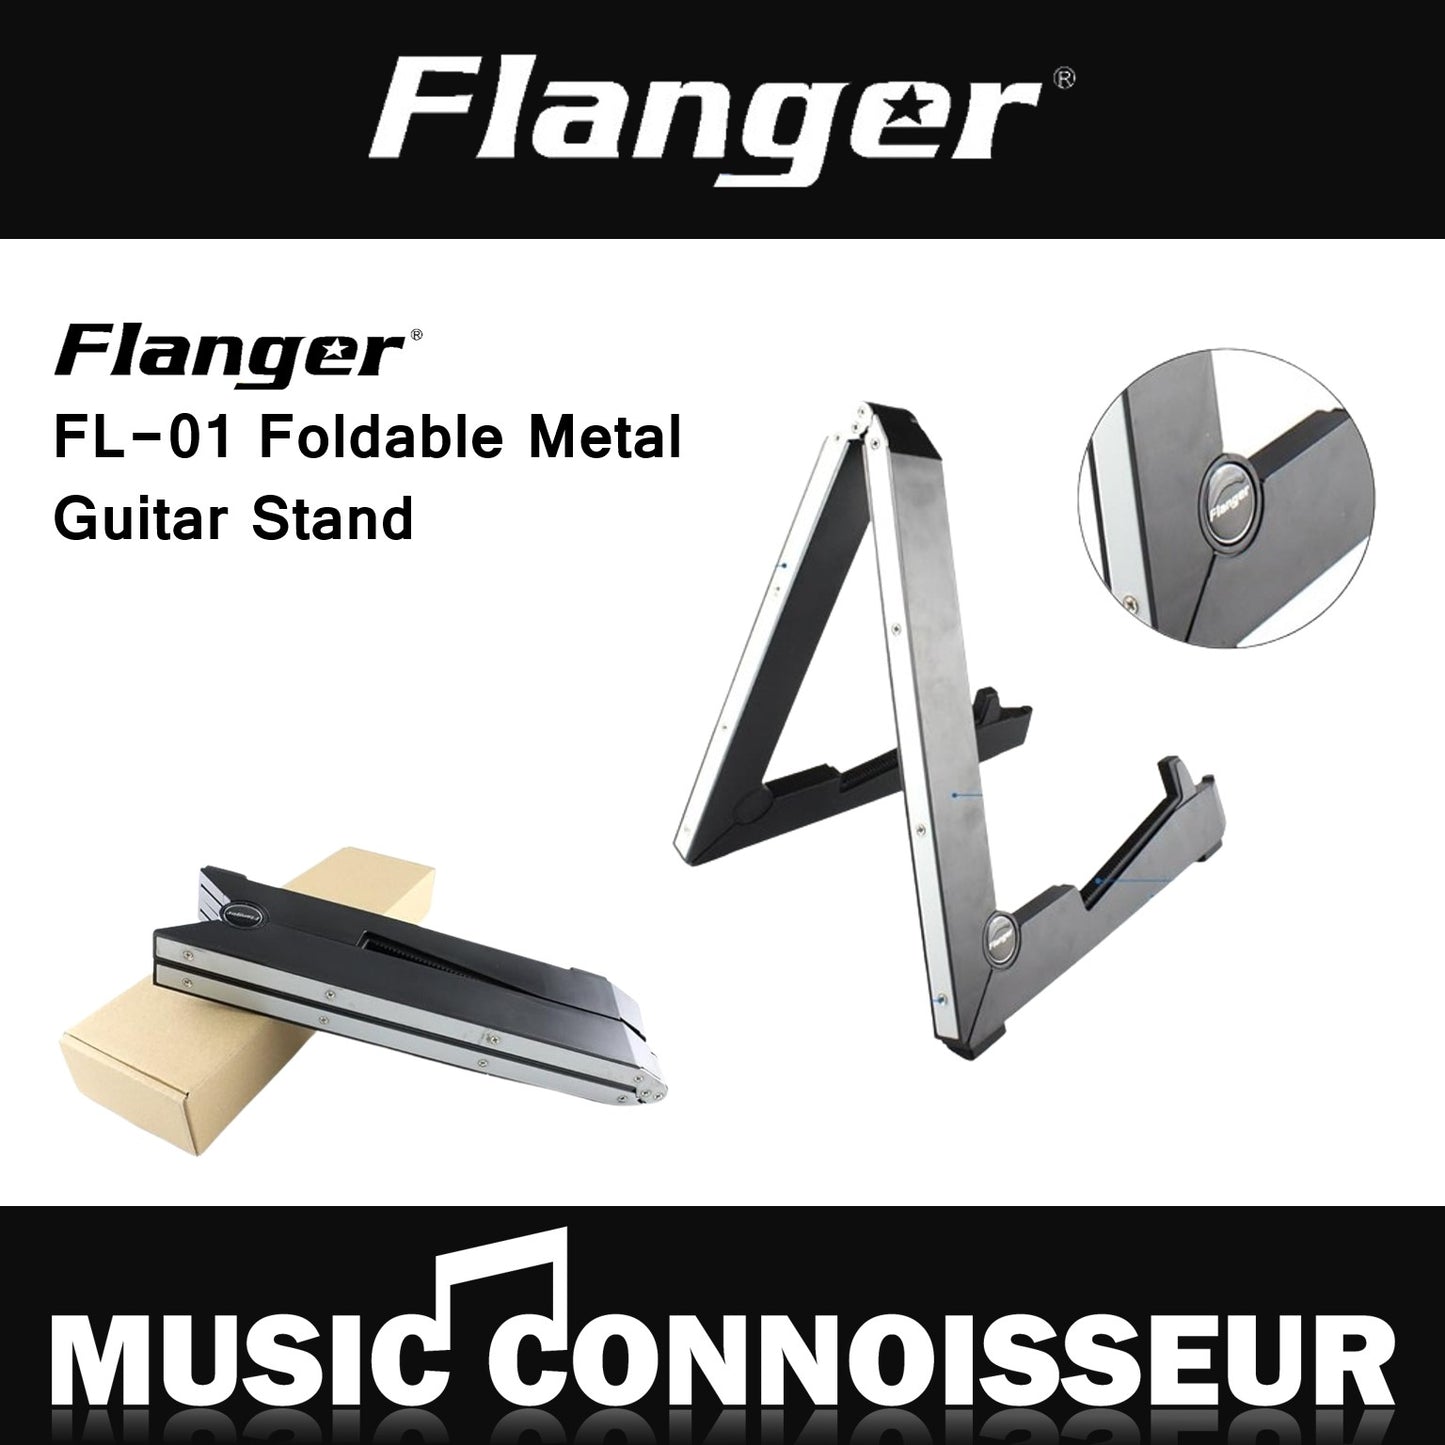 Flanger FL-01 Foldable Metal Guitar Stand